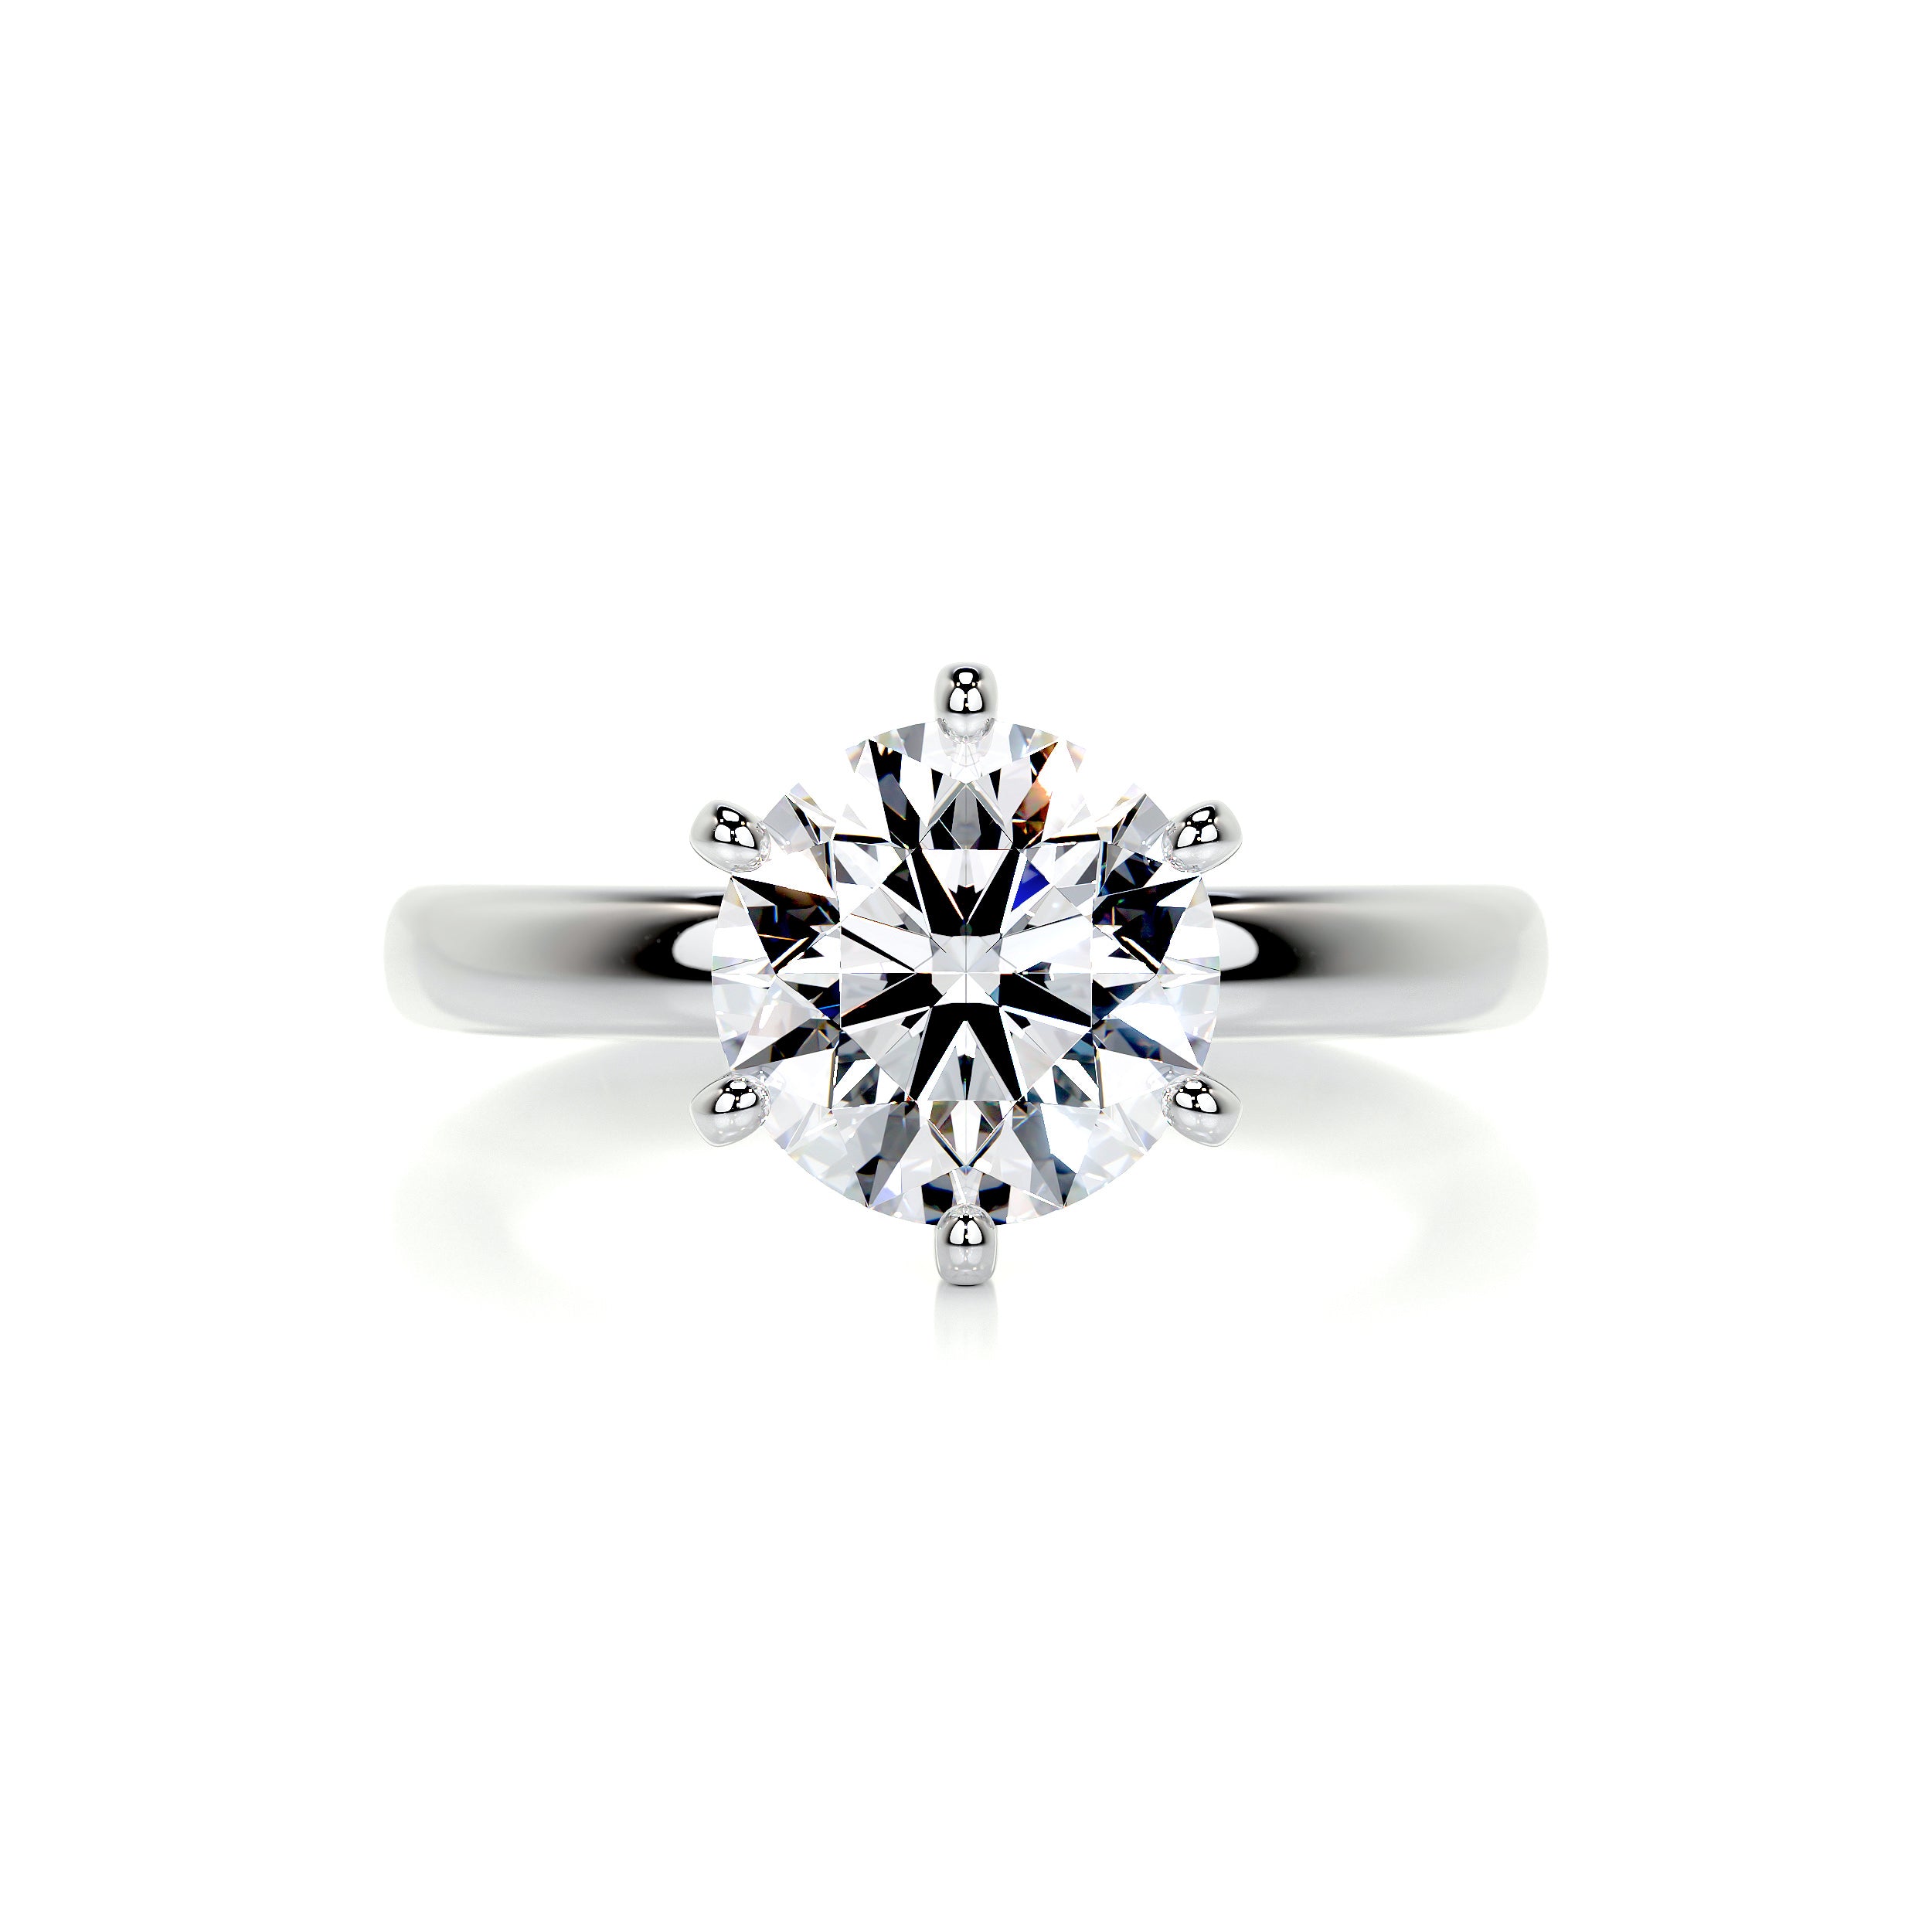 Jessica Diamond Engagement Ring   (2 Carat) -18K White Gold